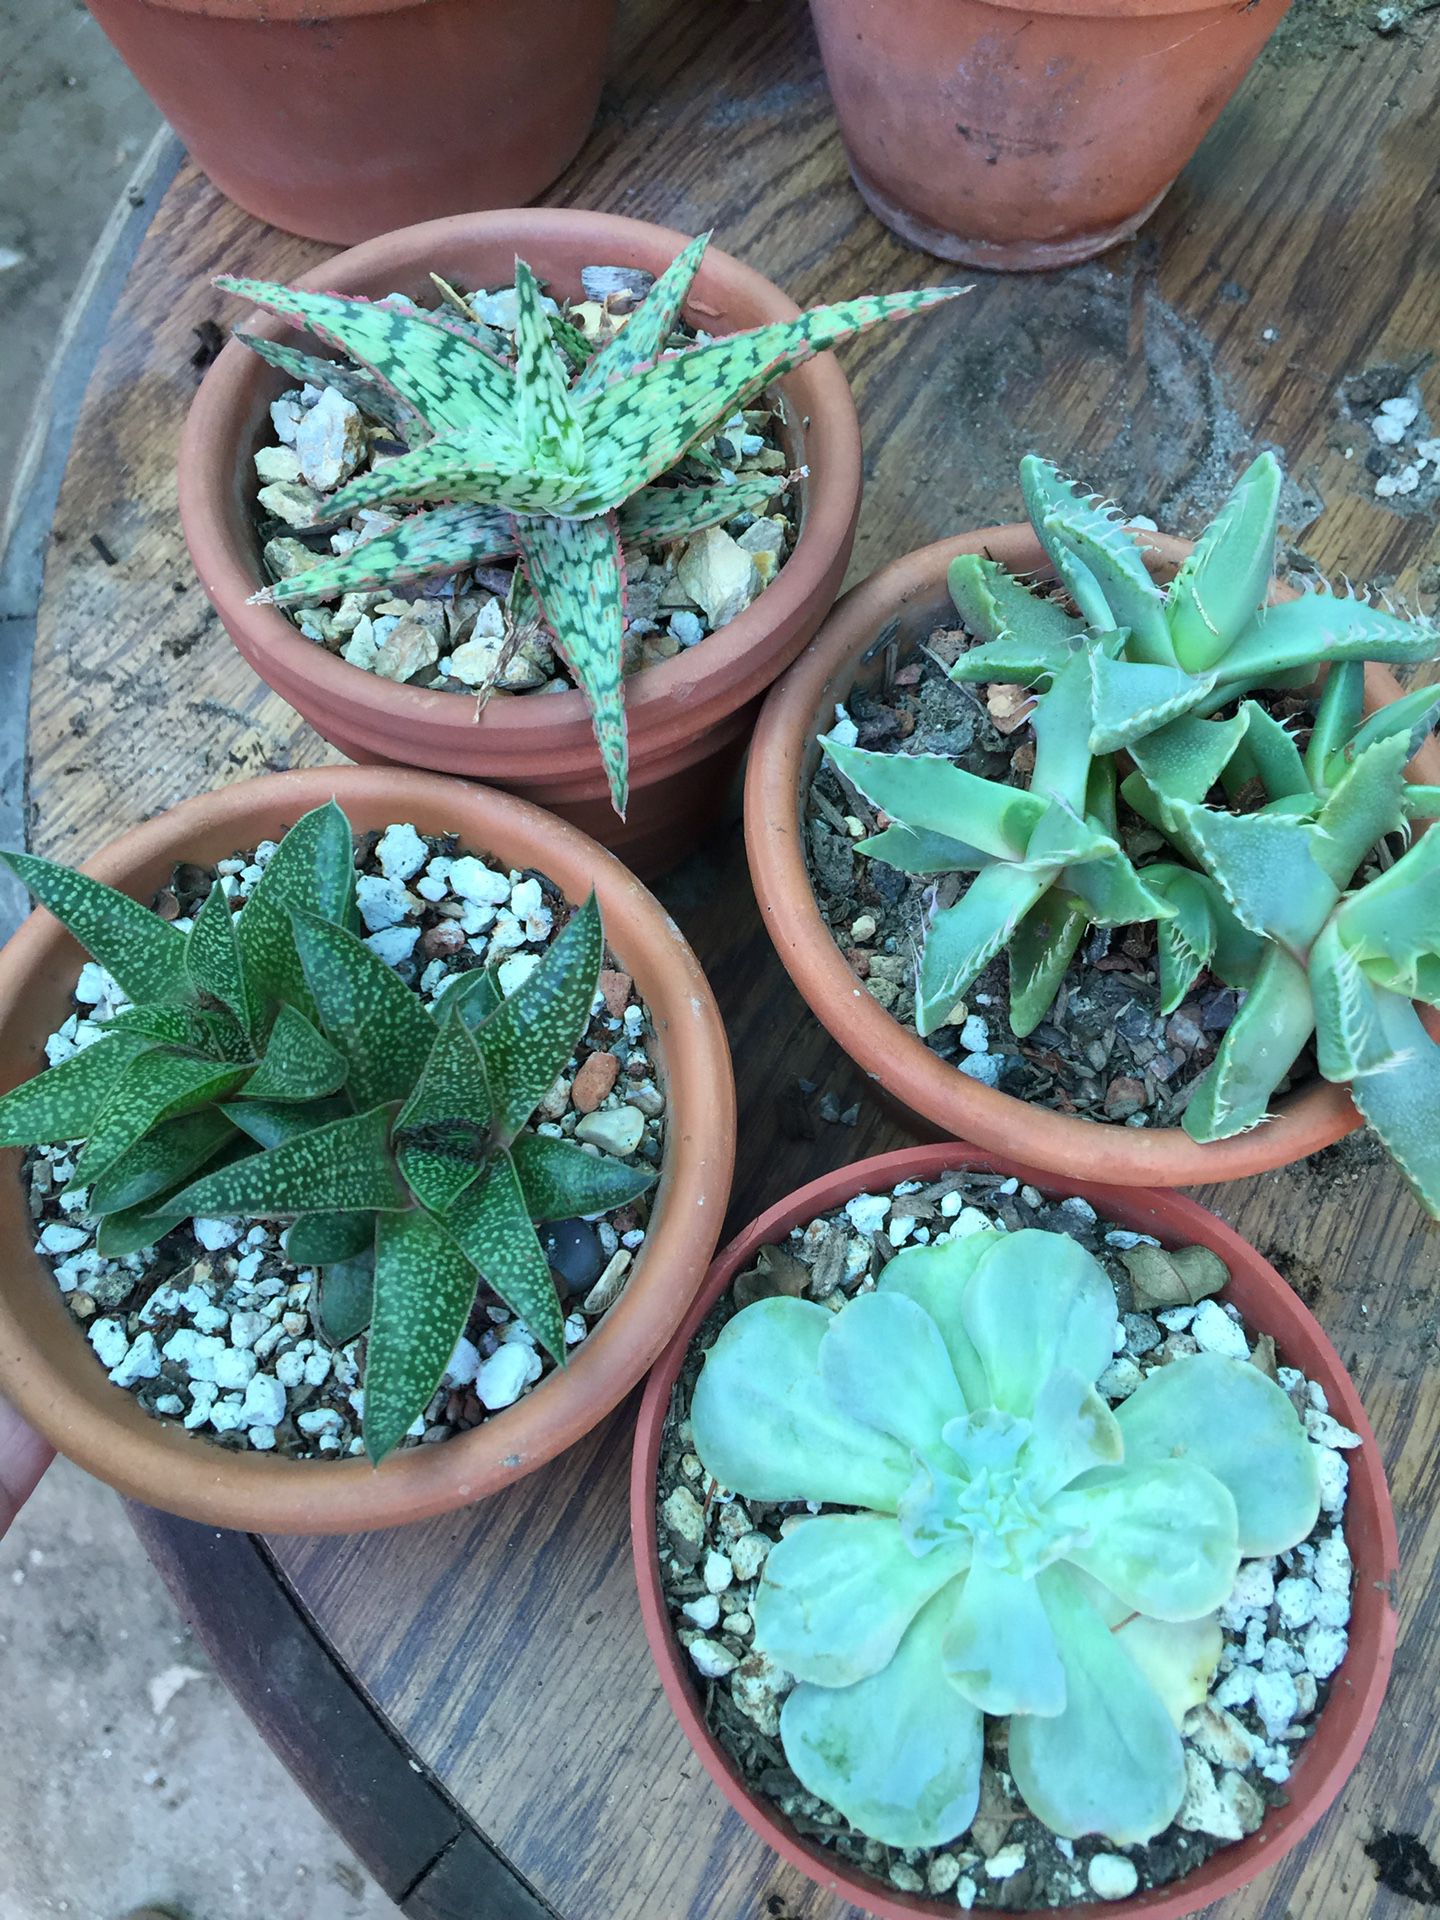 Assorted succulent plants